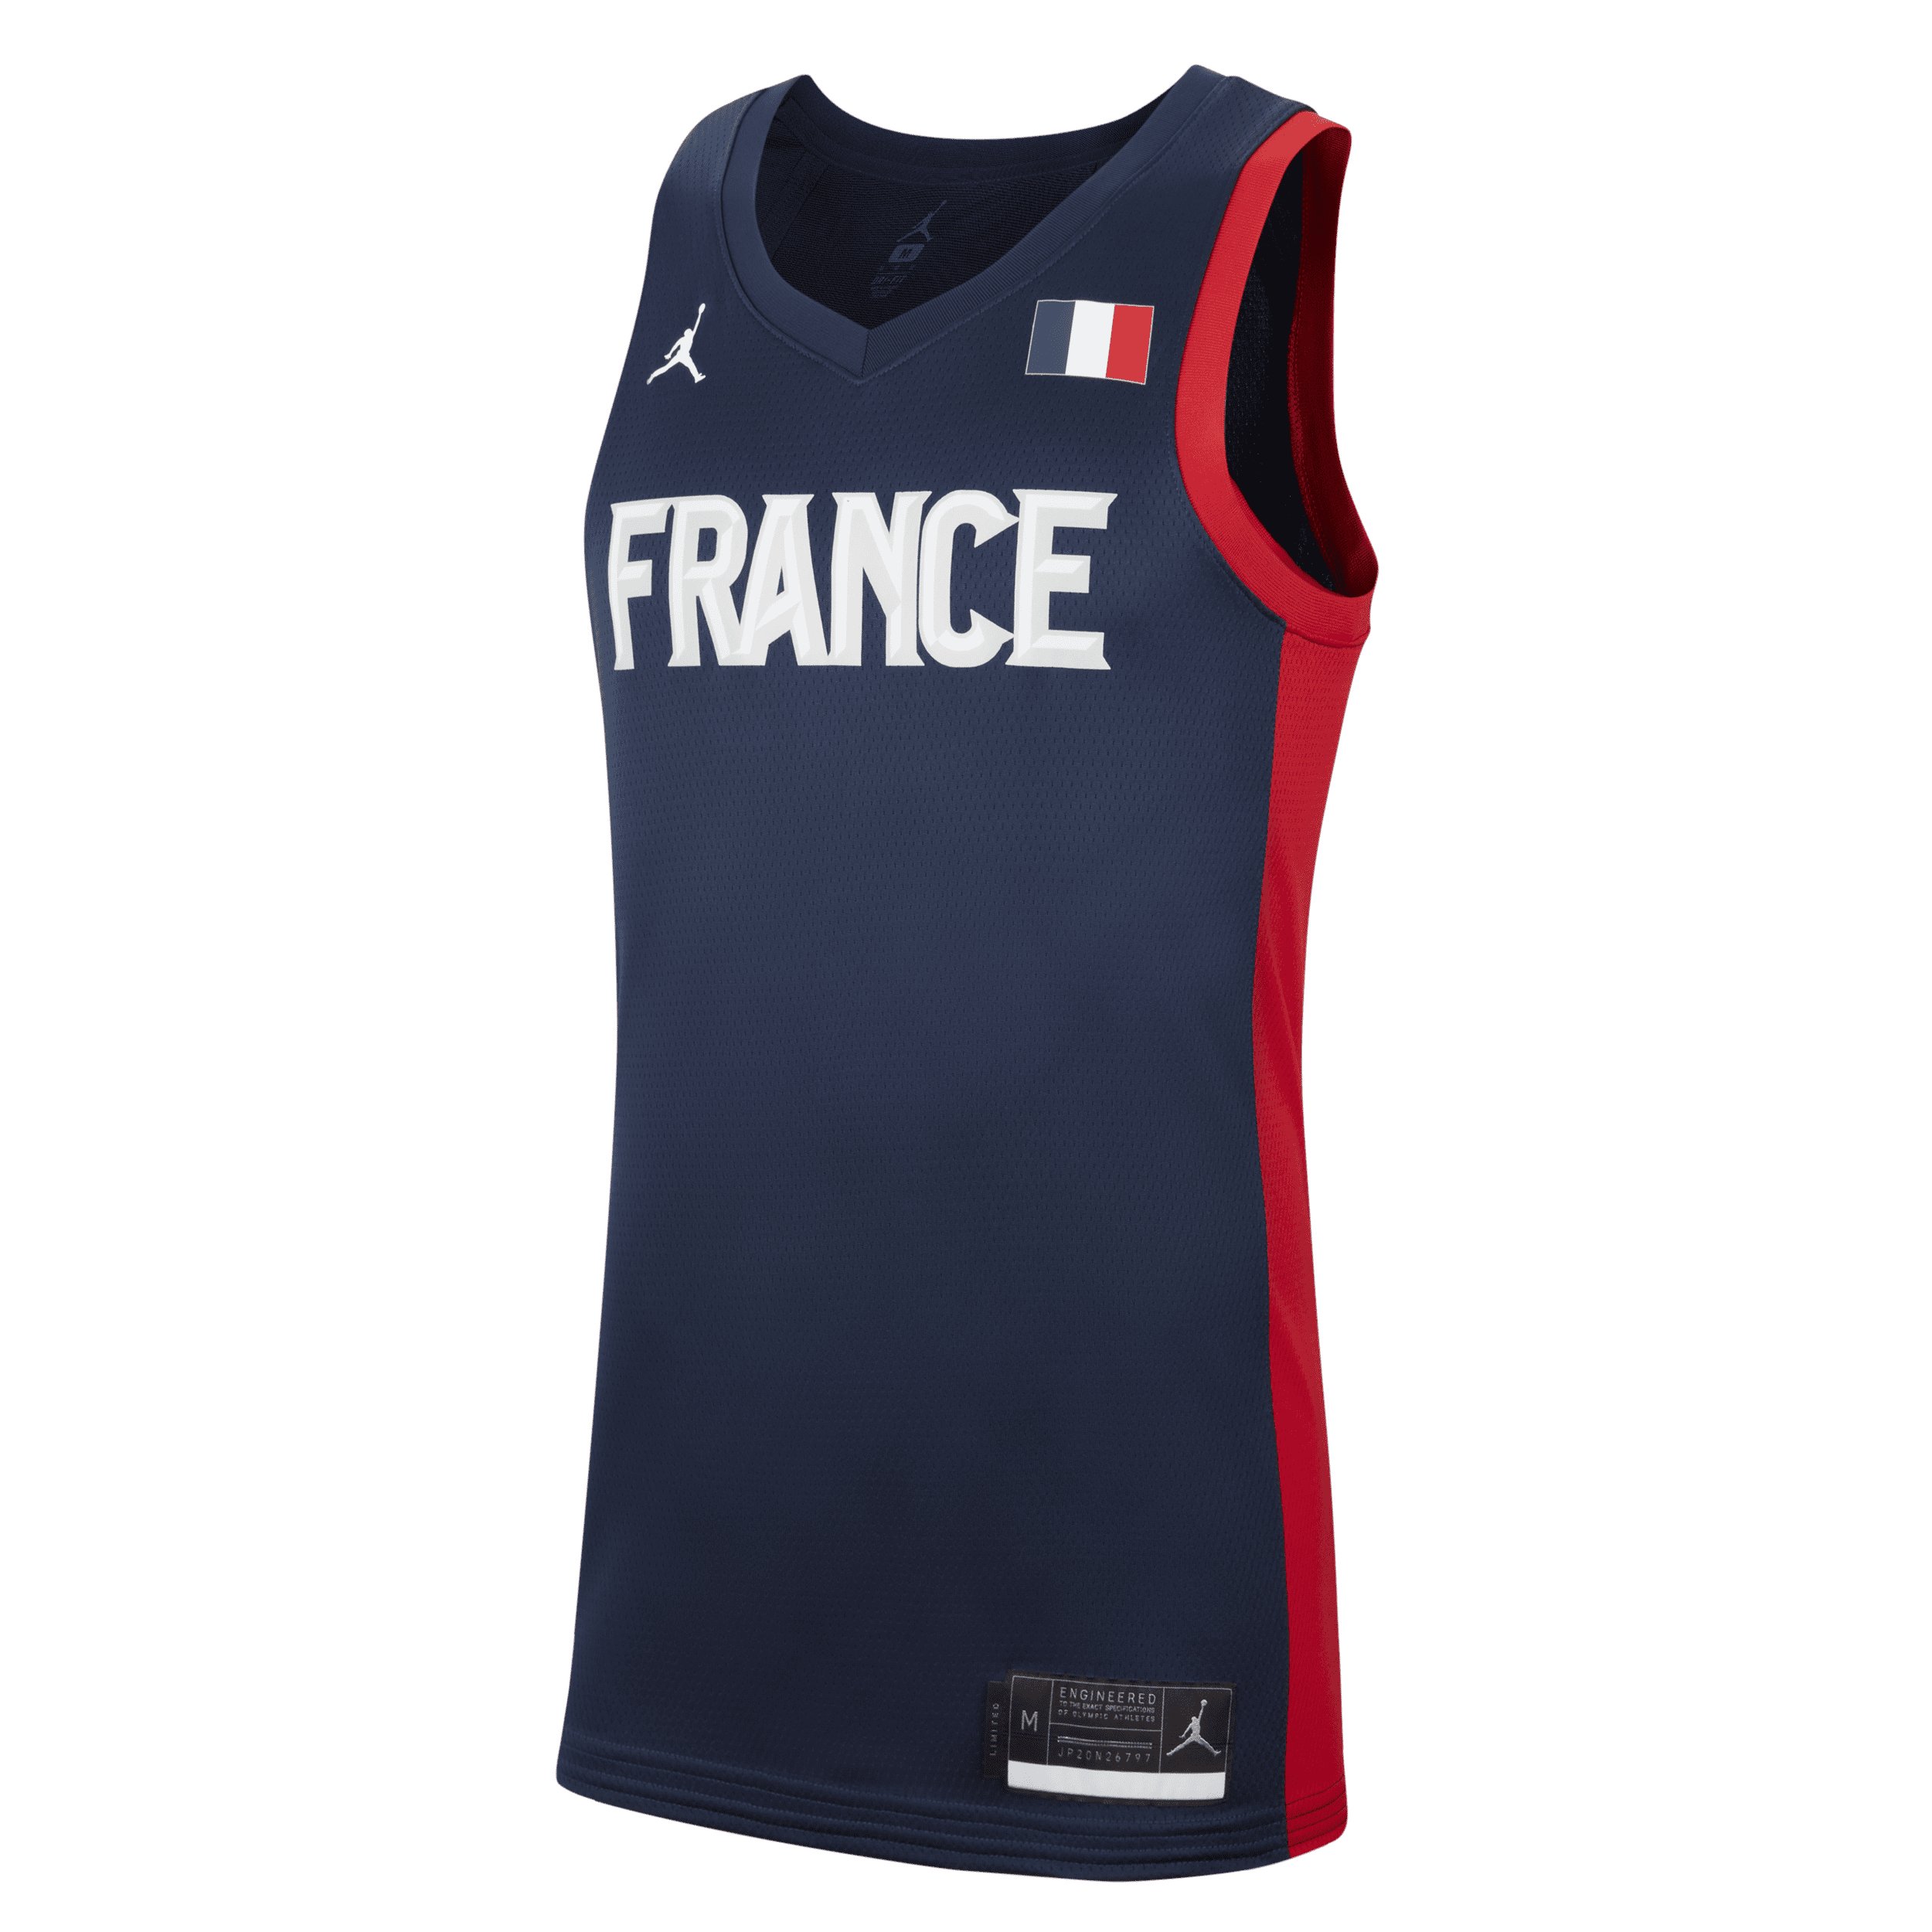 Nike Frankrijk Jordan (Road) Limited basketbaljersey - Blauw